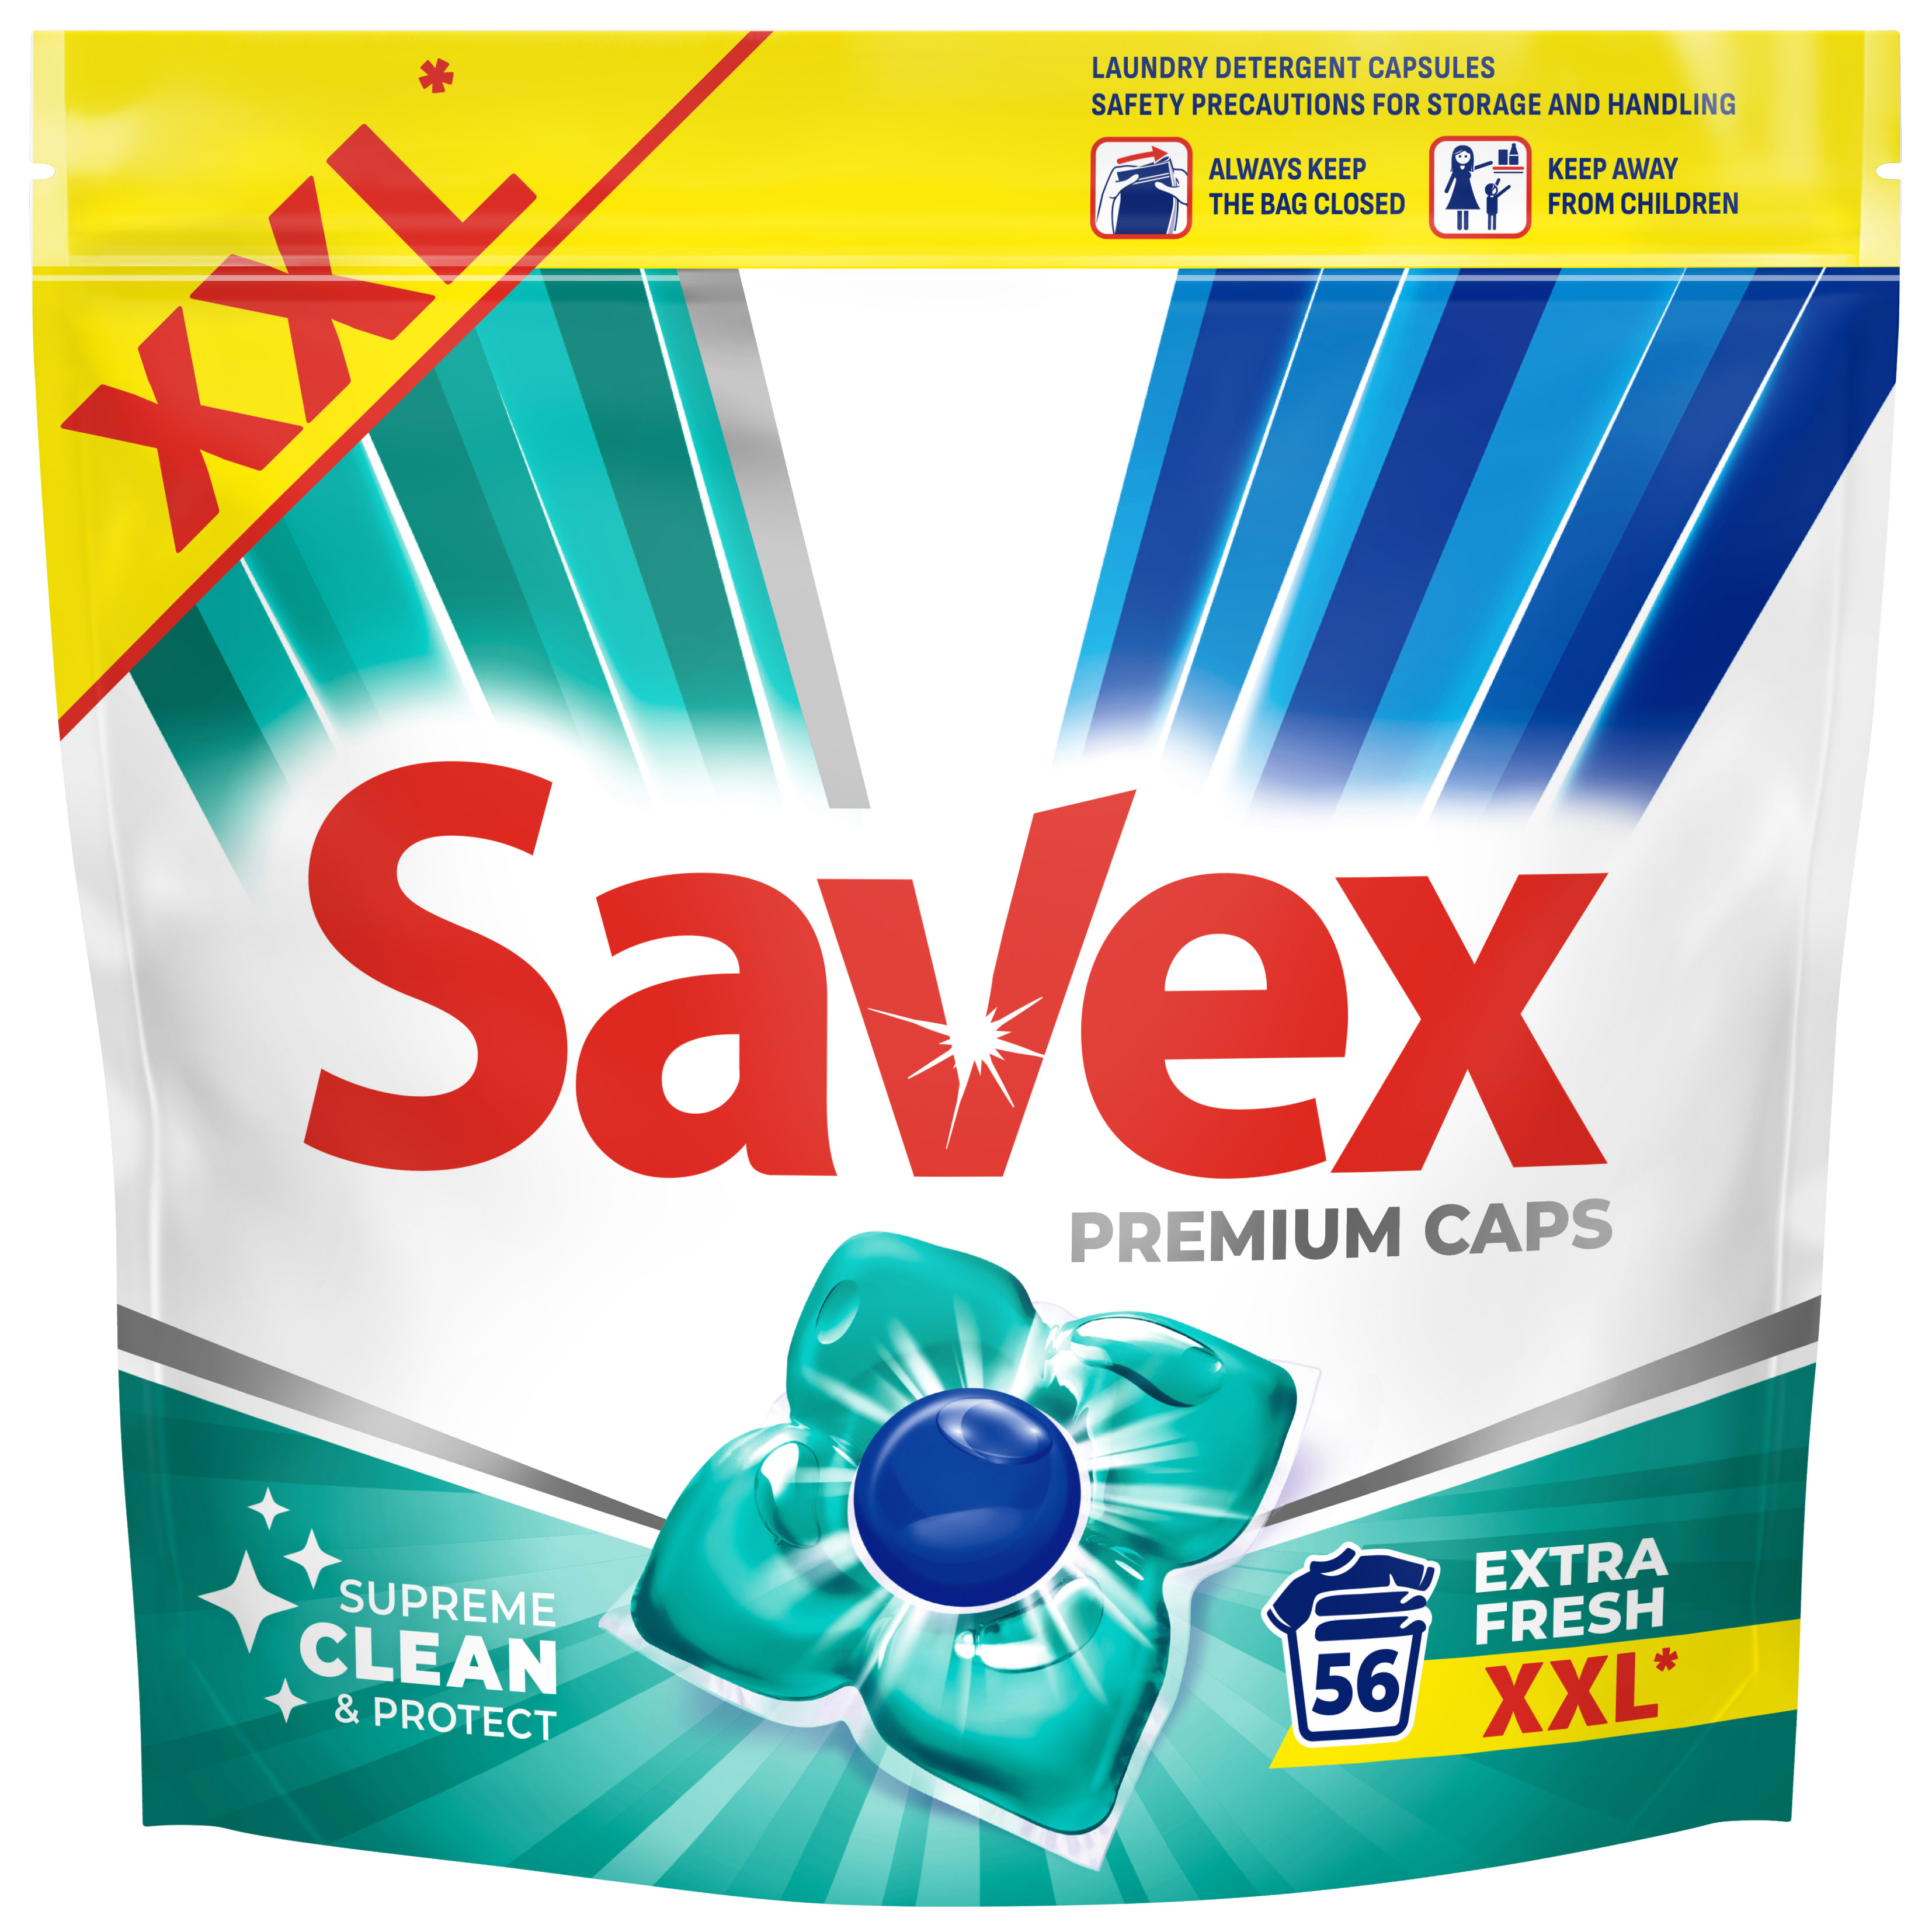 Капсули для прання Savex Premium Caps Extra Fresh 56 шт. - фото 1